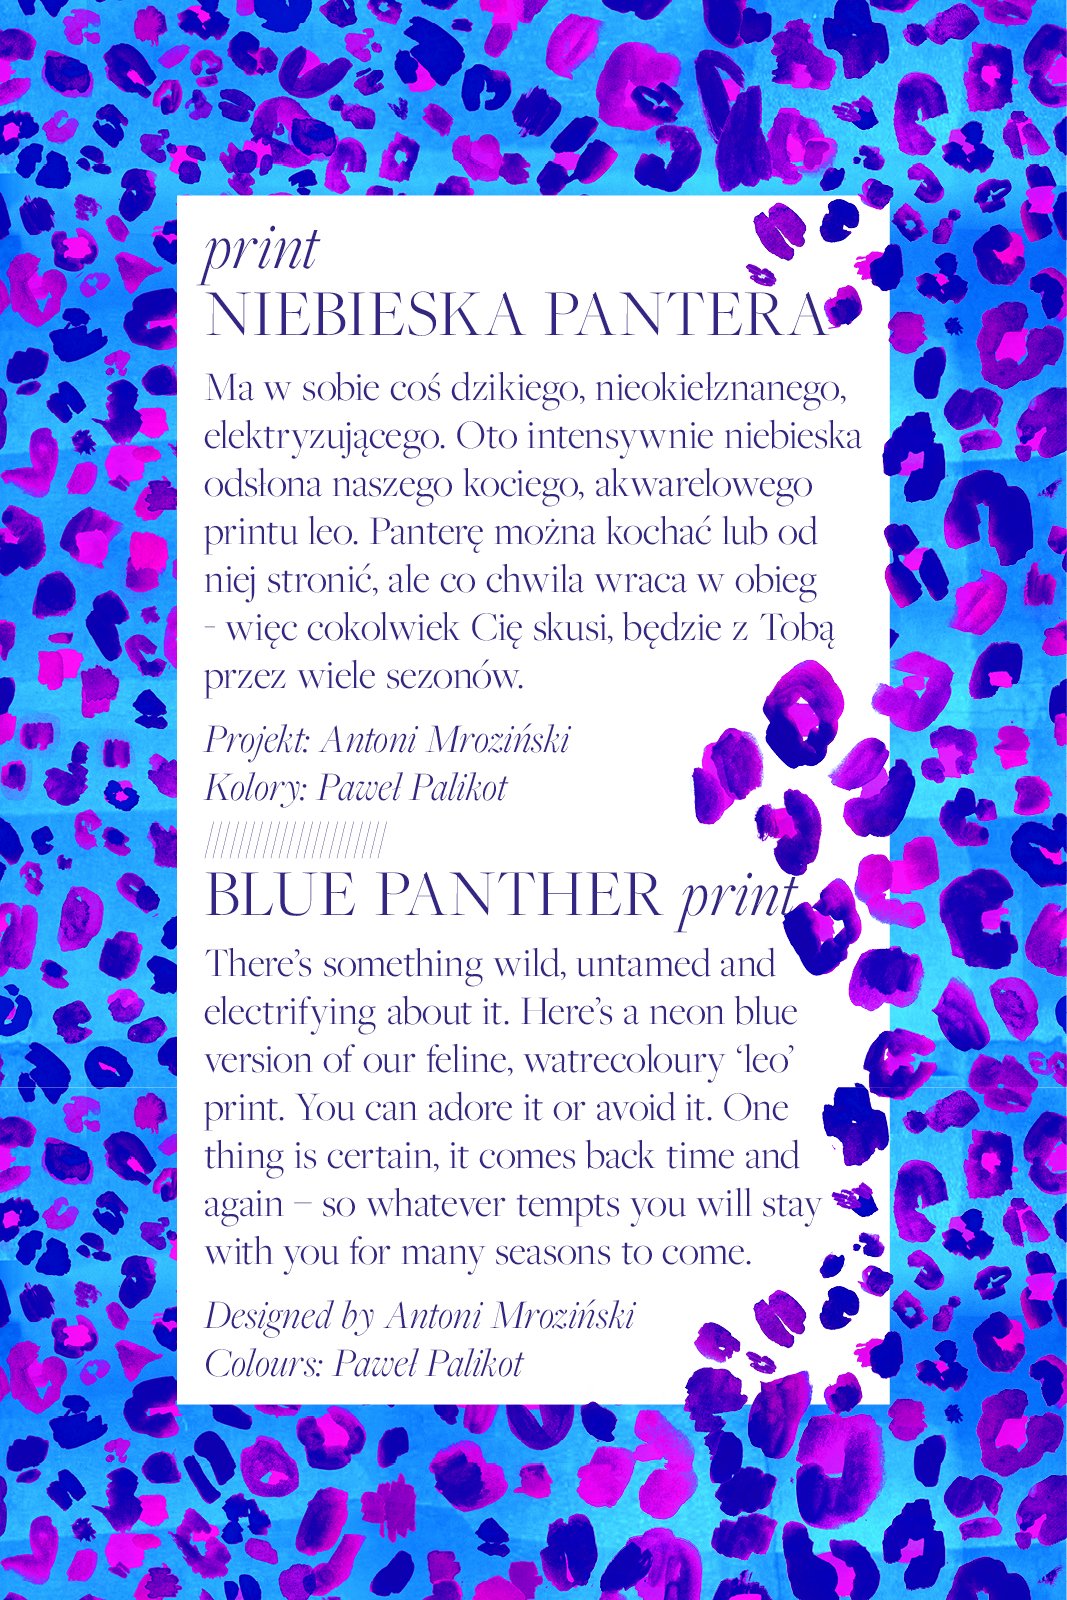 PRIMA BALLERINA print niebieska pantera